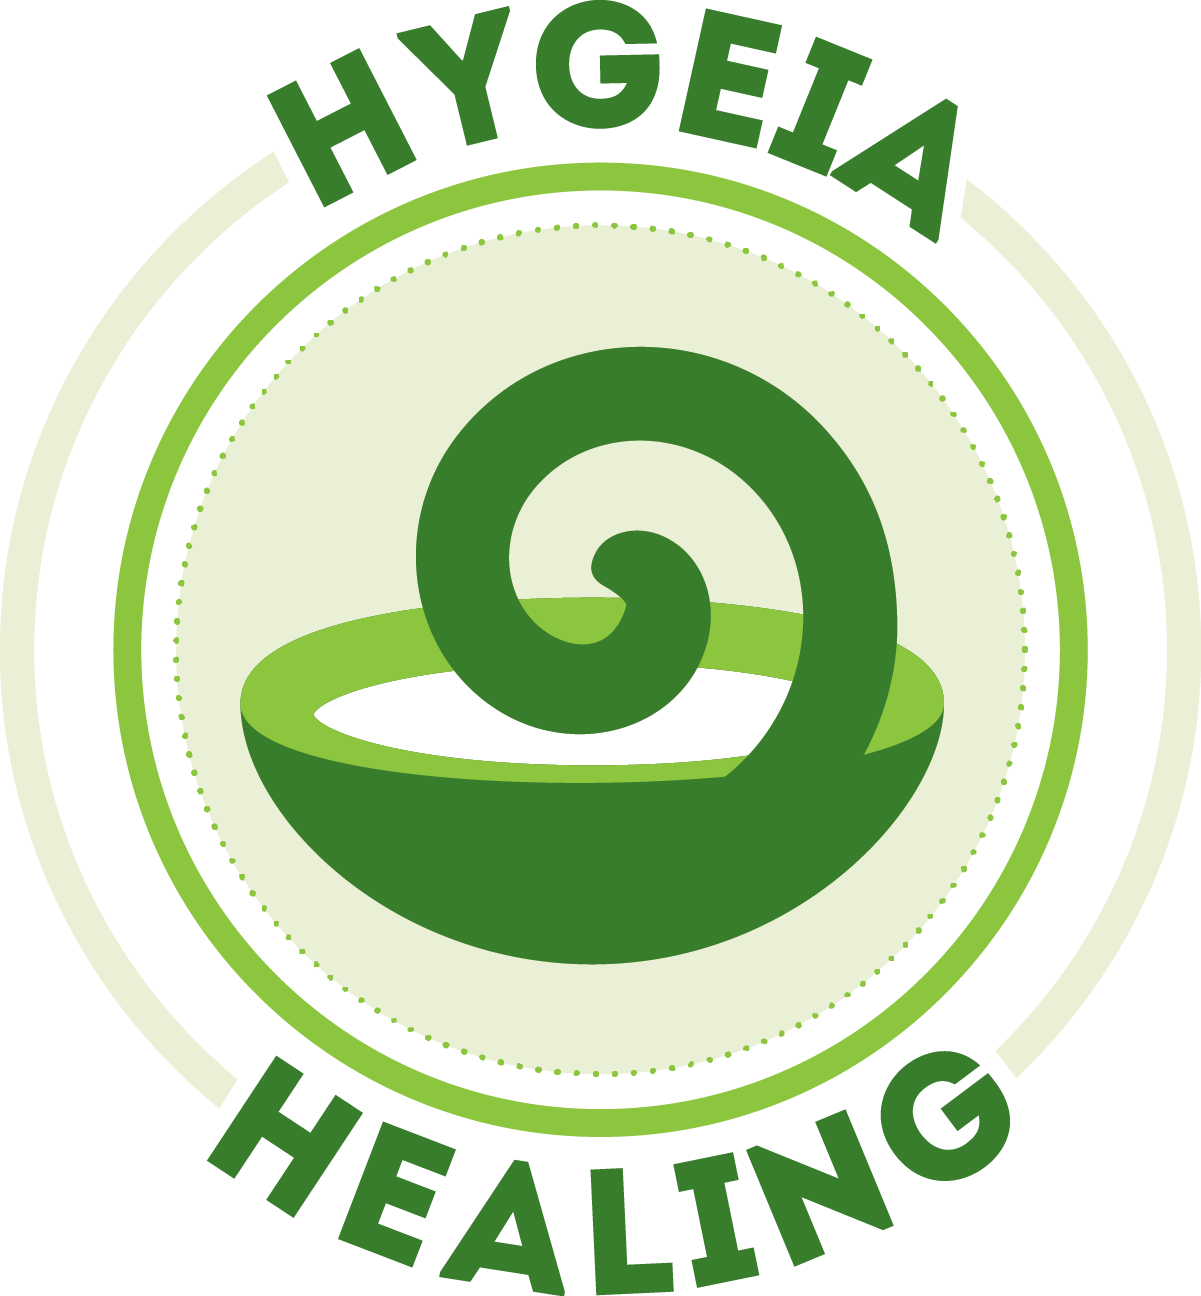 Club Sport Hygeia Healing - Hygeia Healing (1201x1296)